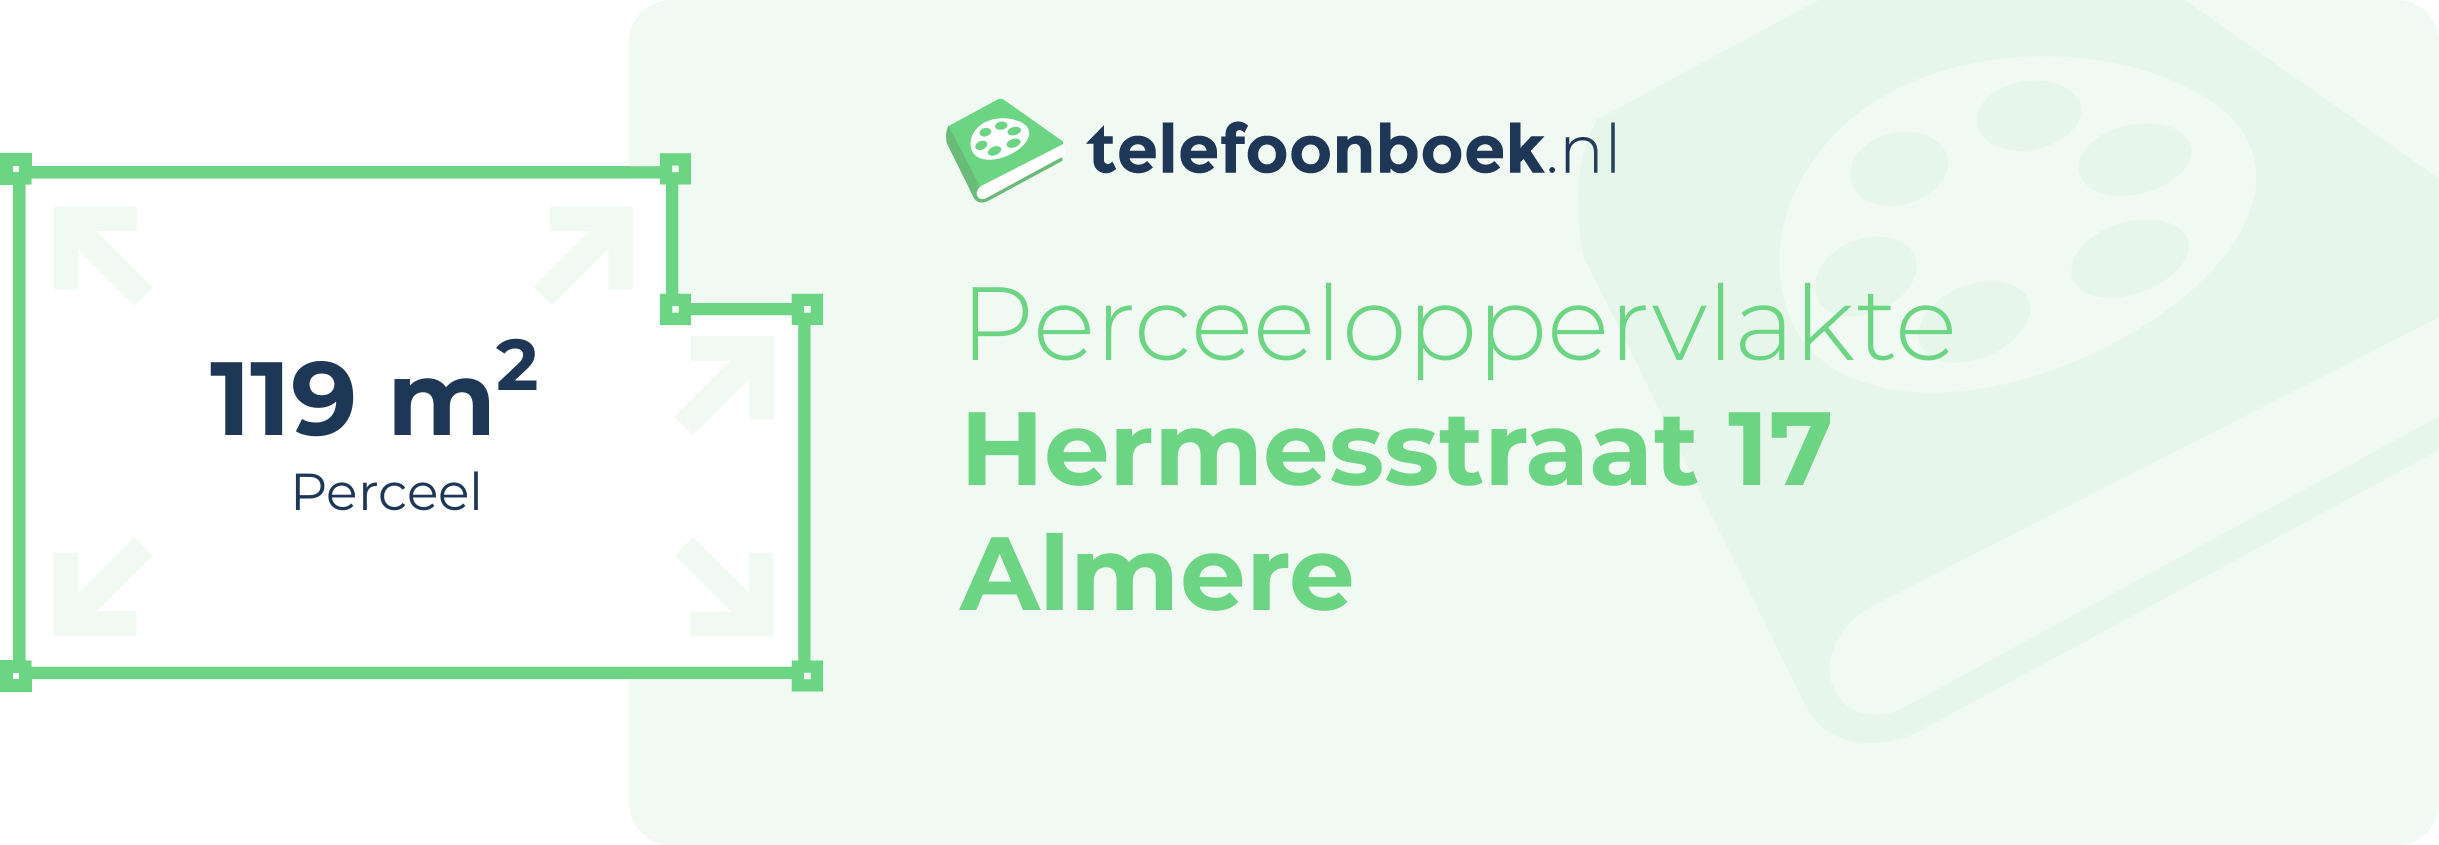 Perceeloppervlakte Hermesstraat 17 Almere